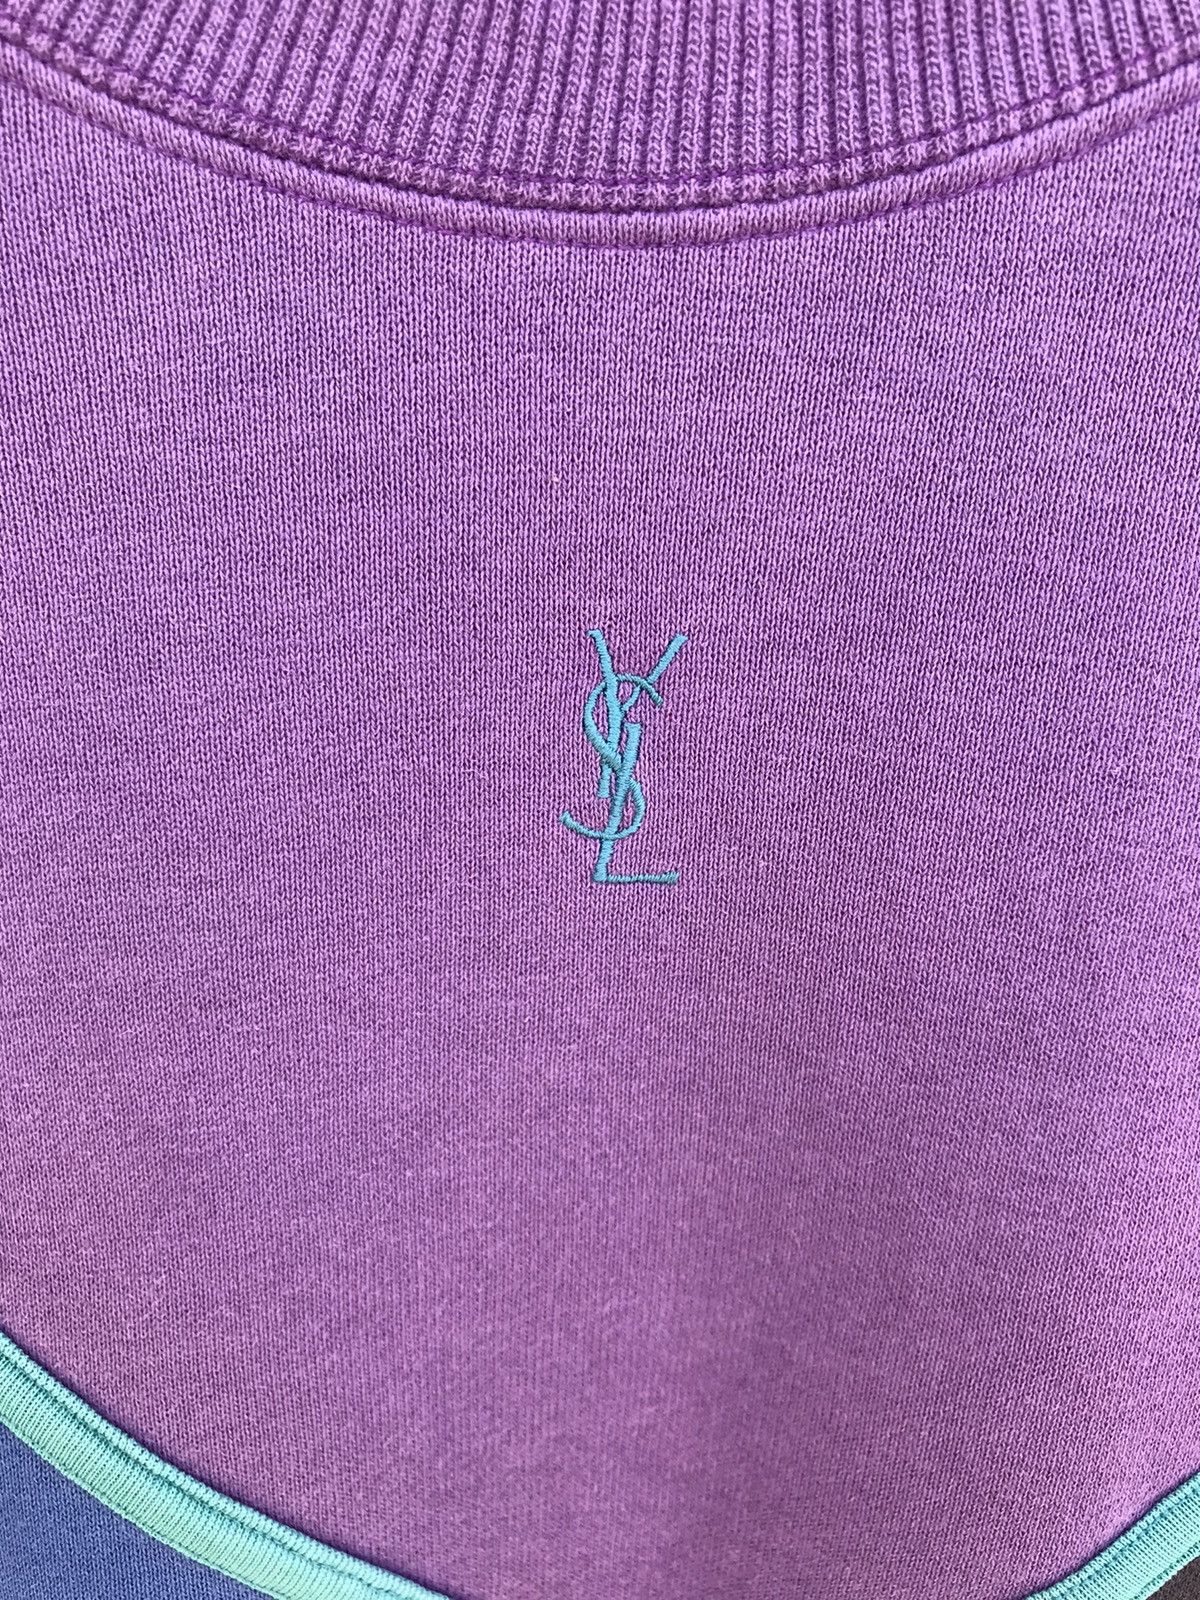 YSL Yves Saint Laurent Center Multicolor Sweatshirt - 4